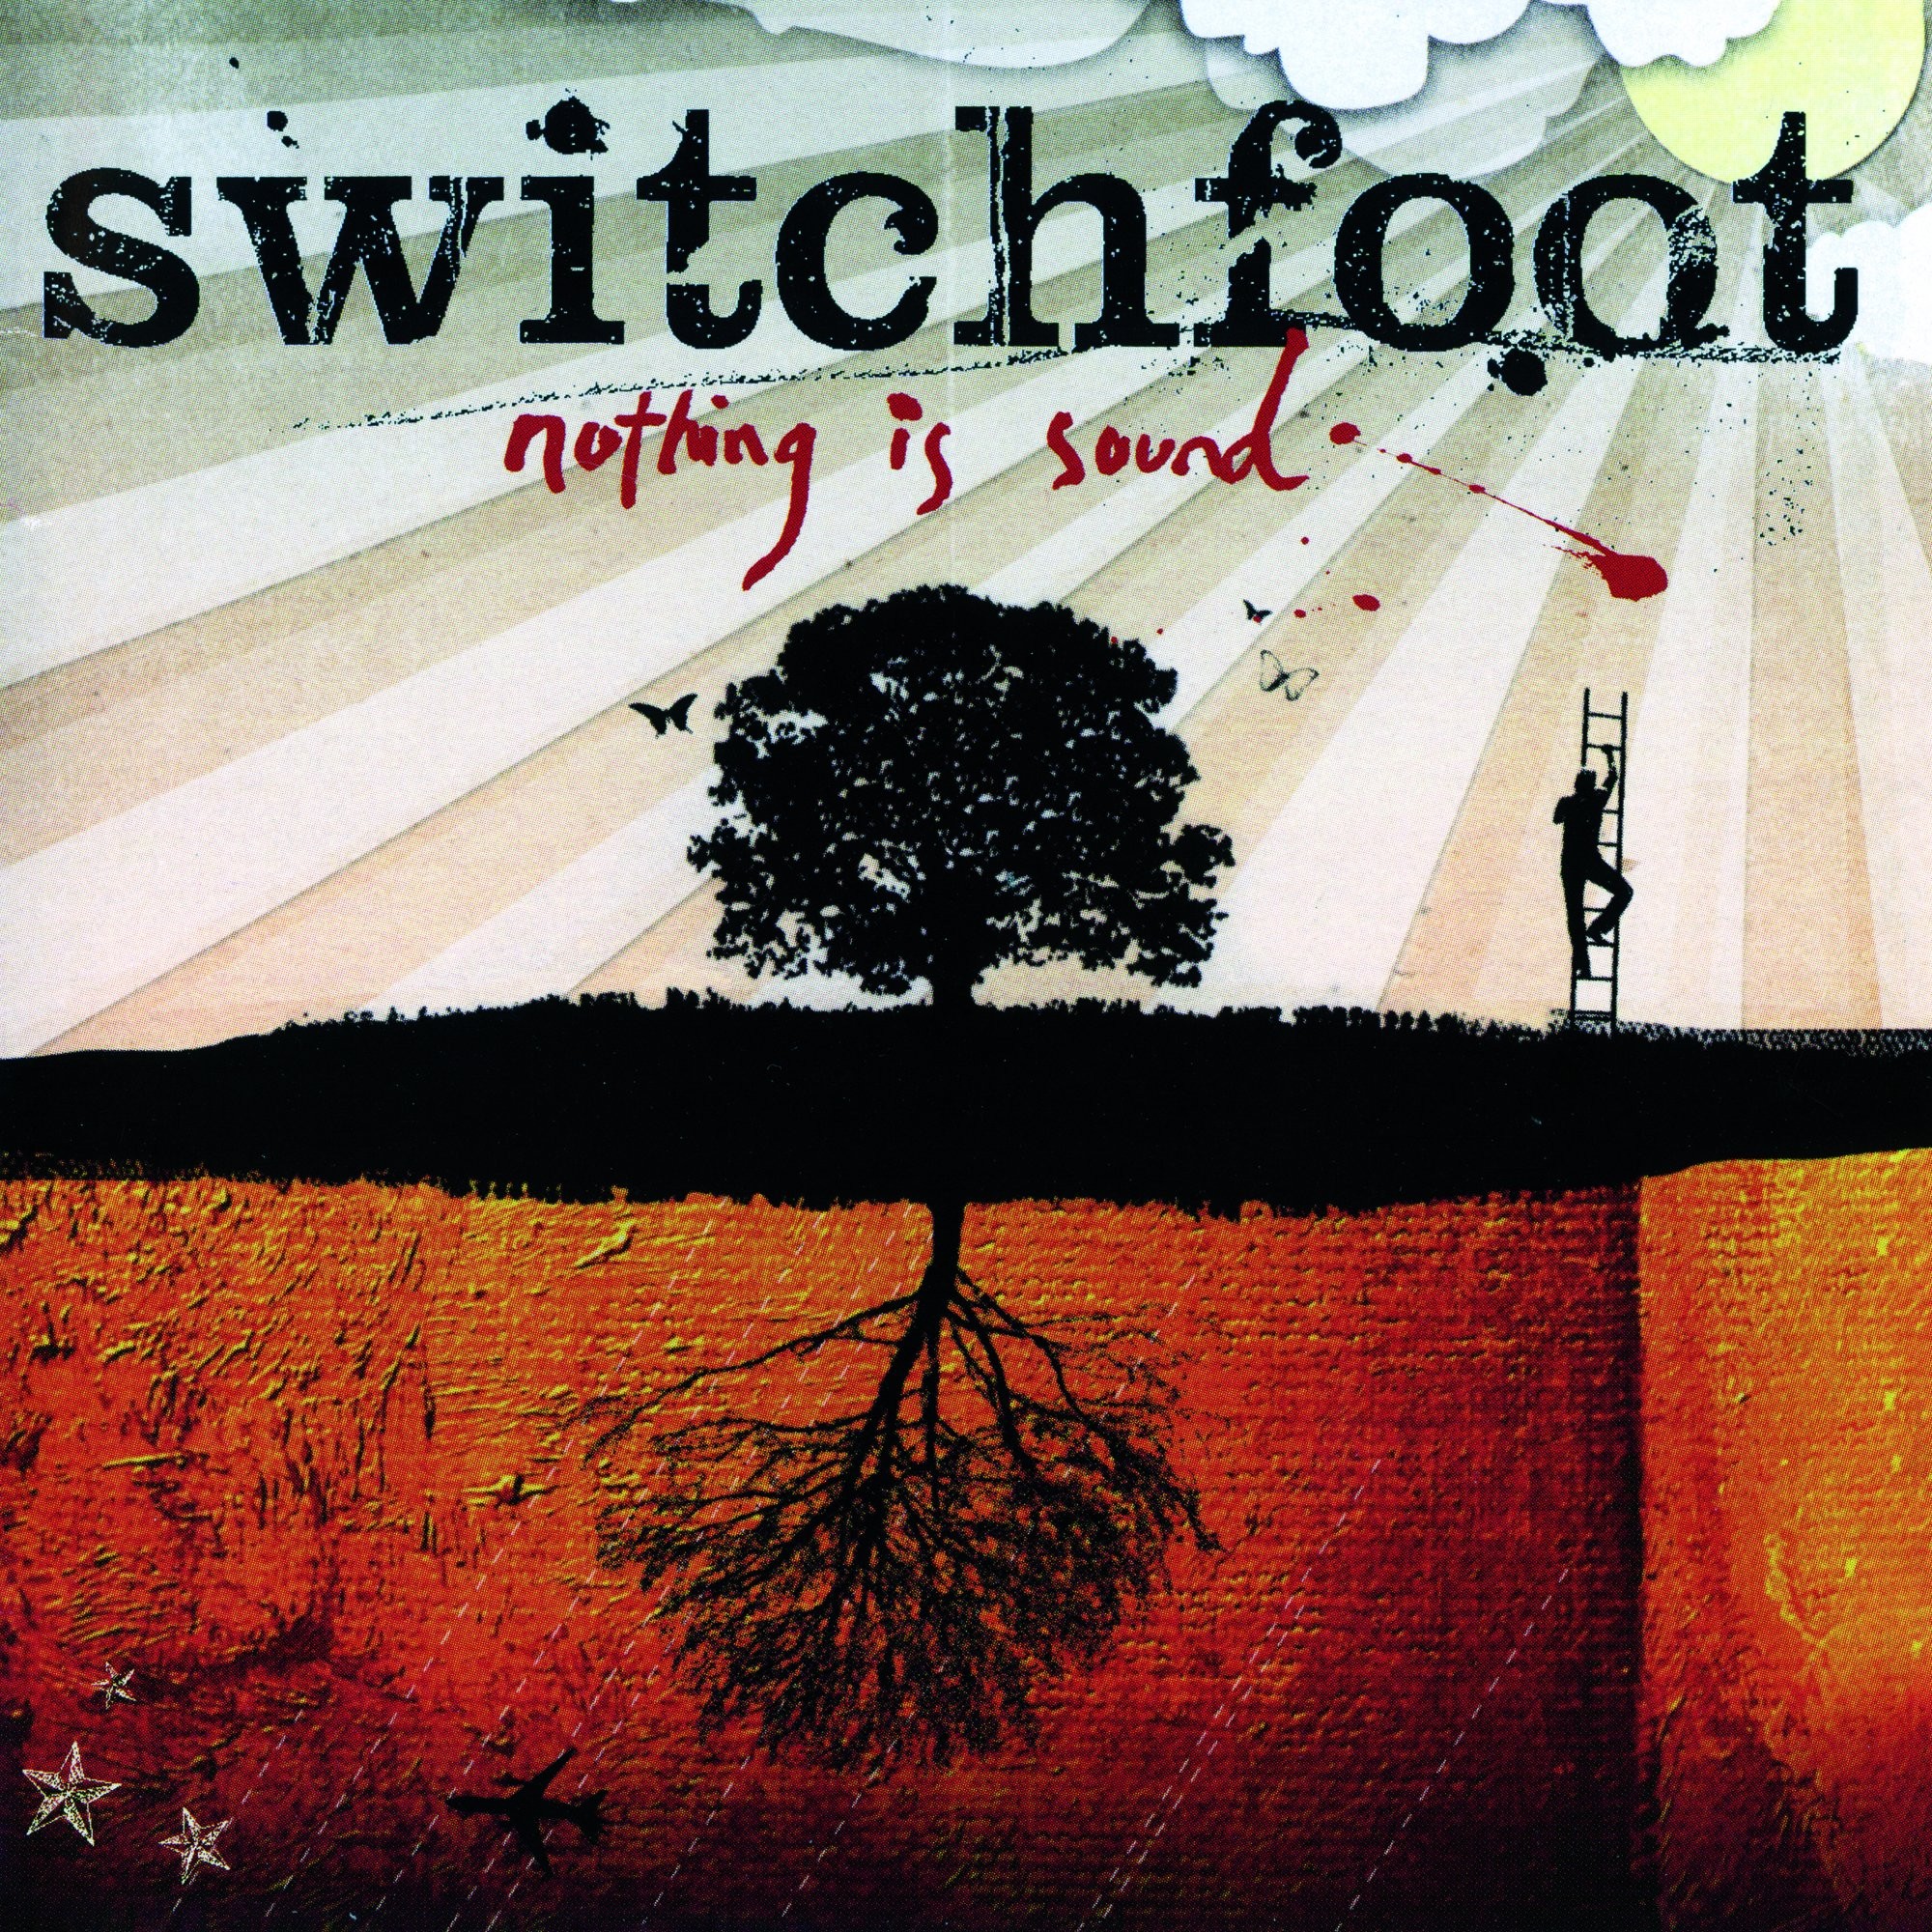 Switchfoot - Nothing is Sound 2XLP Vinyl